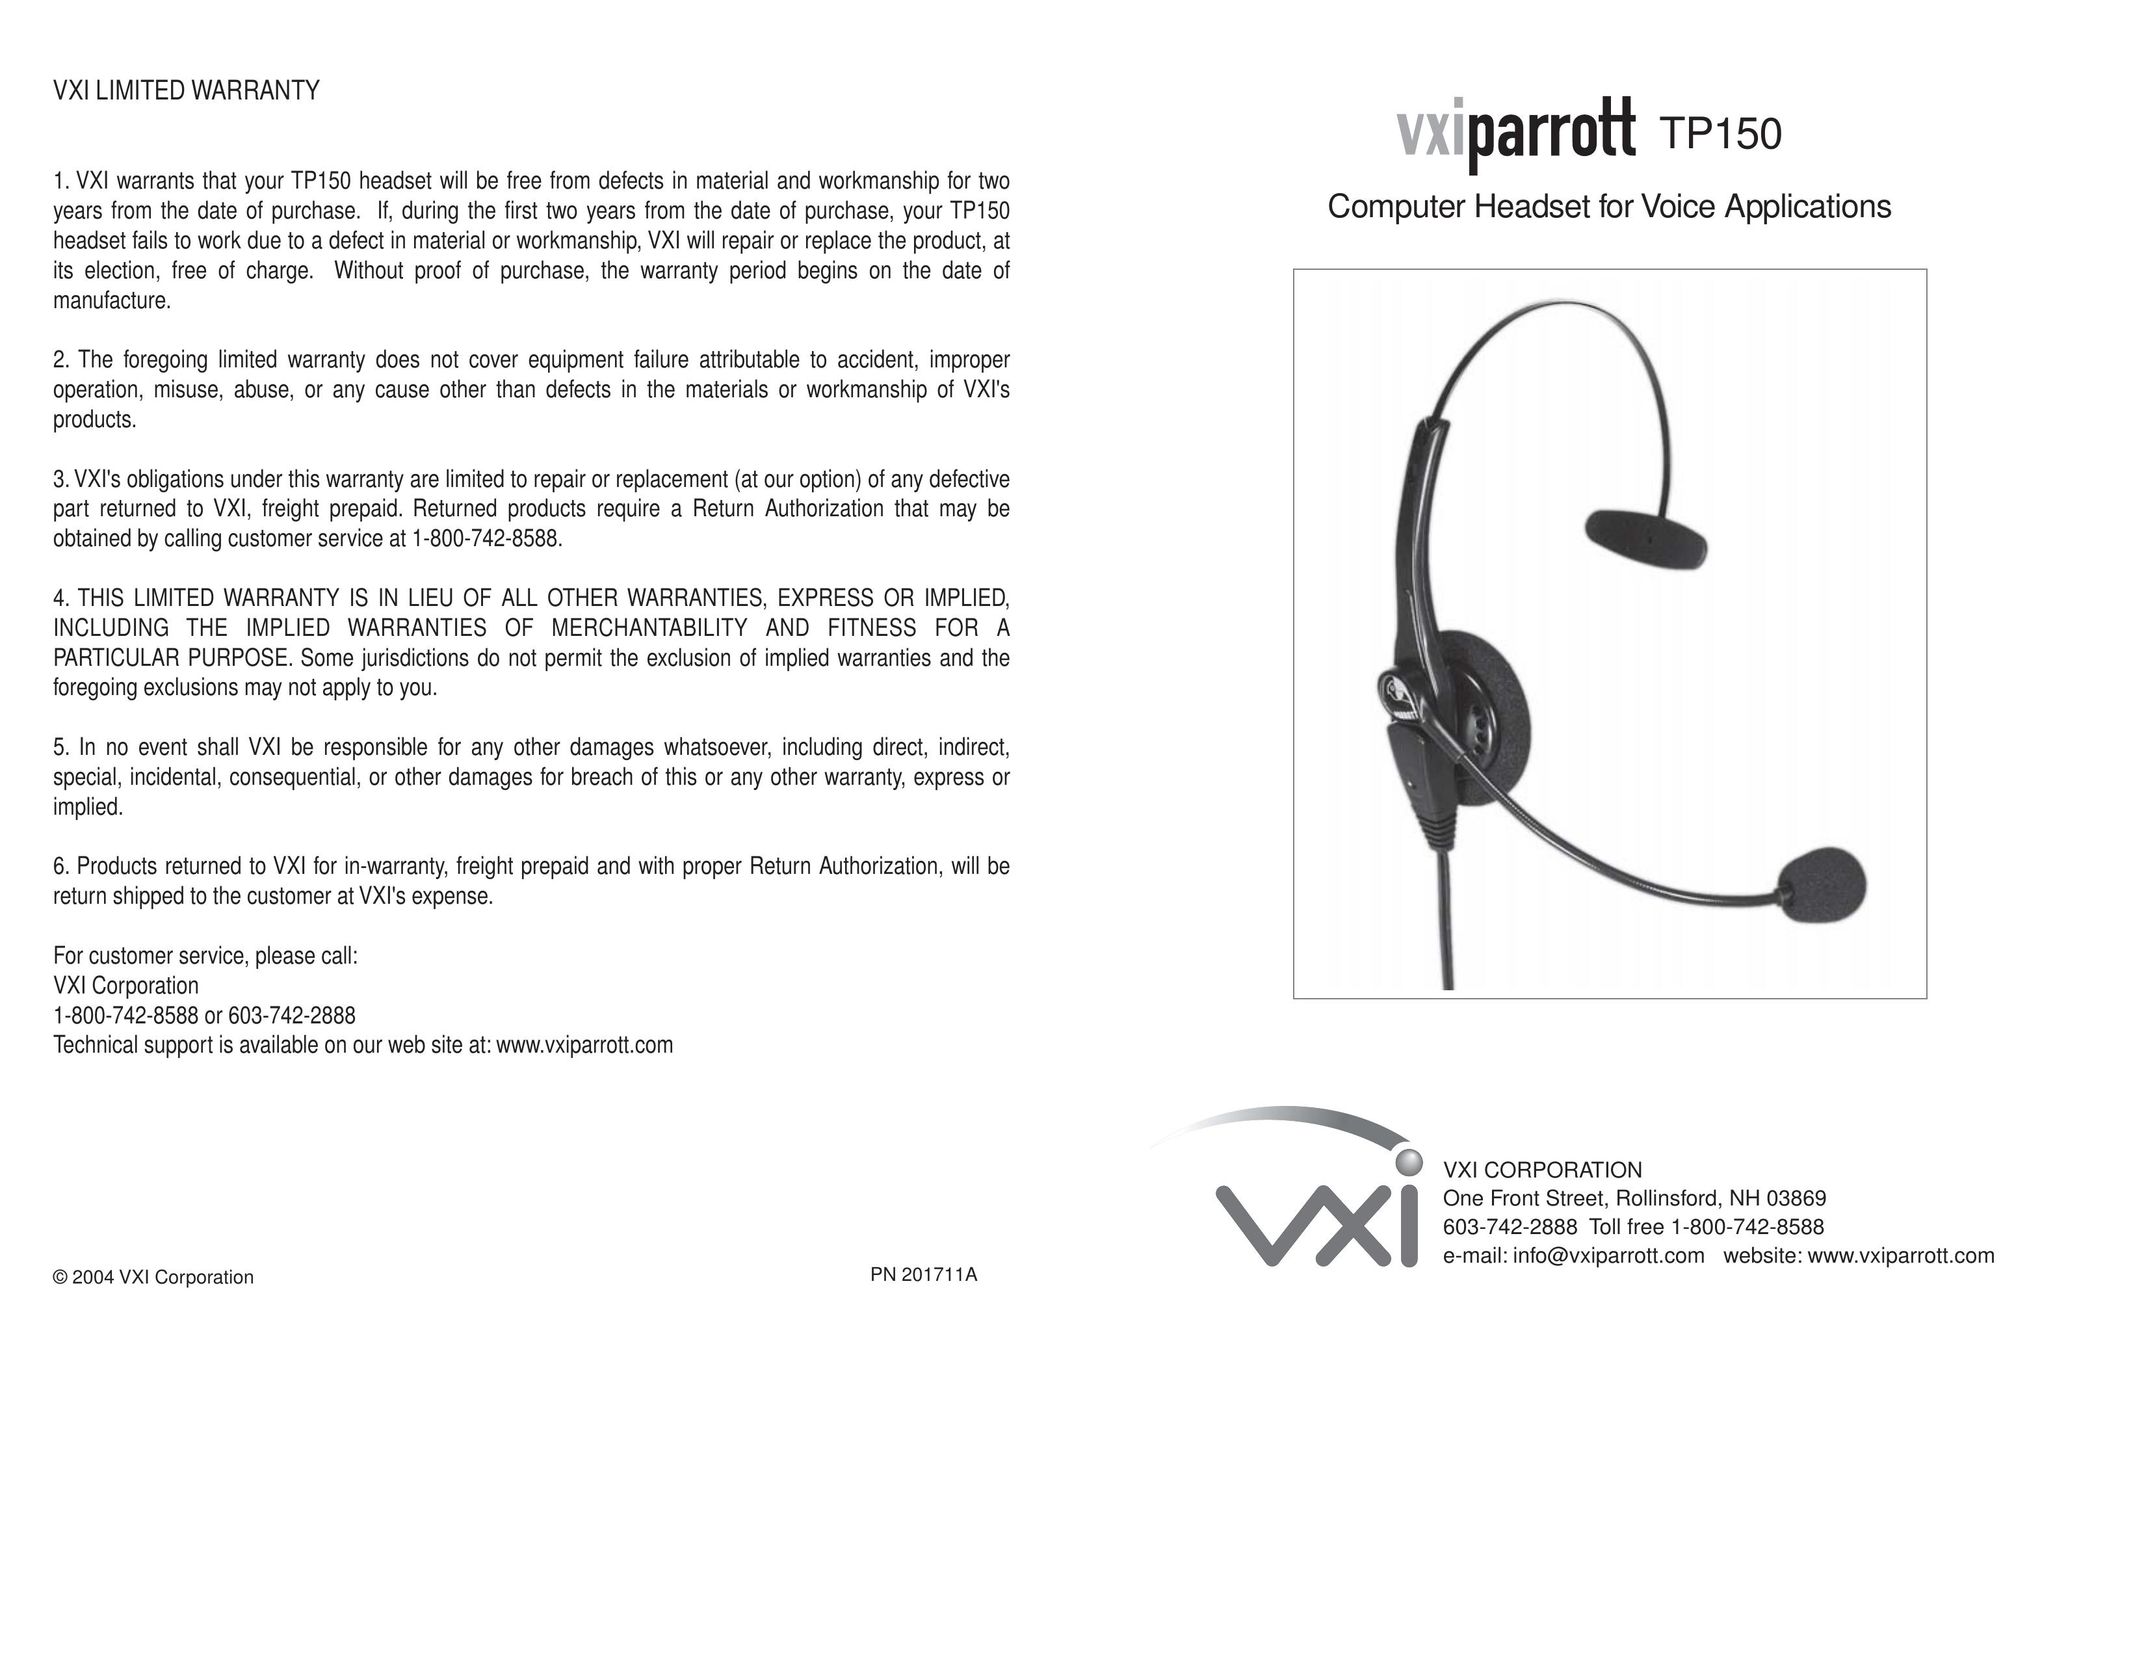 VXI TP150 Headphones User Manual